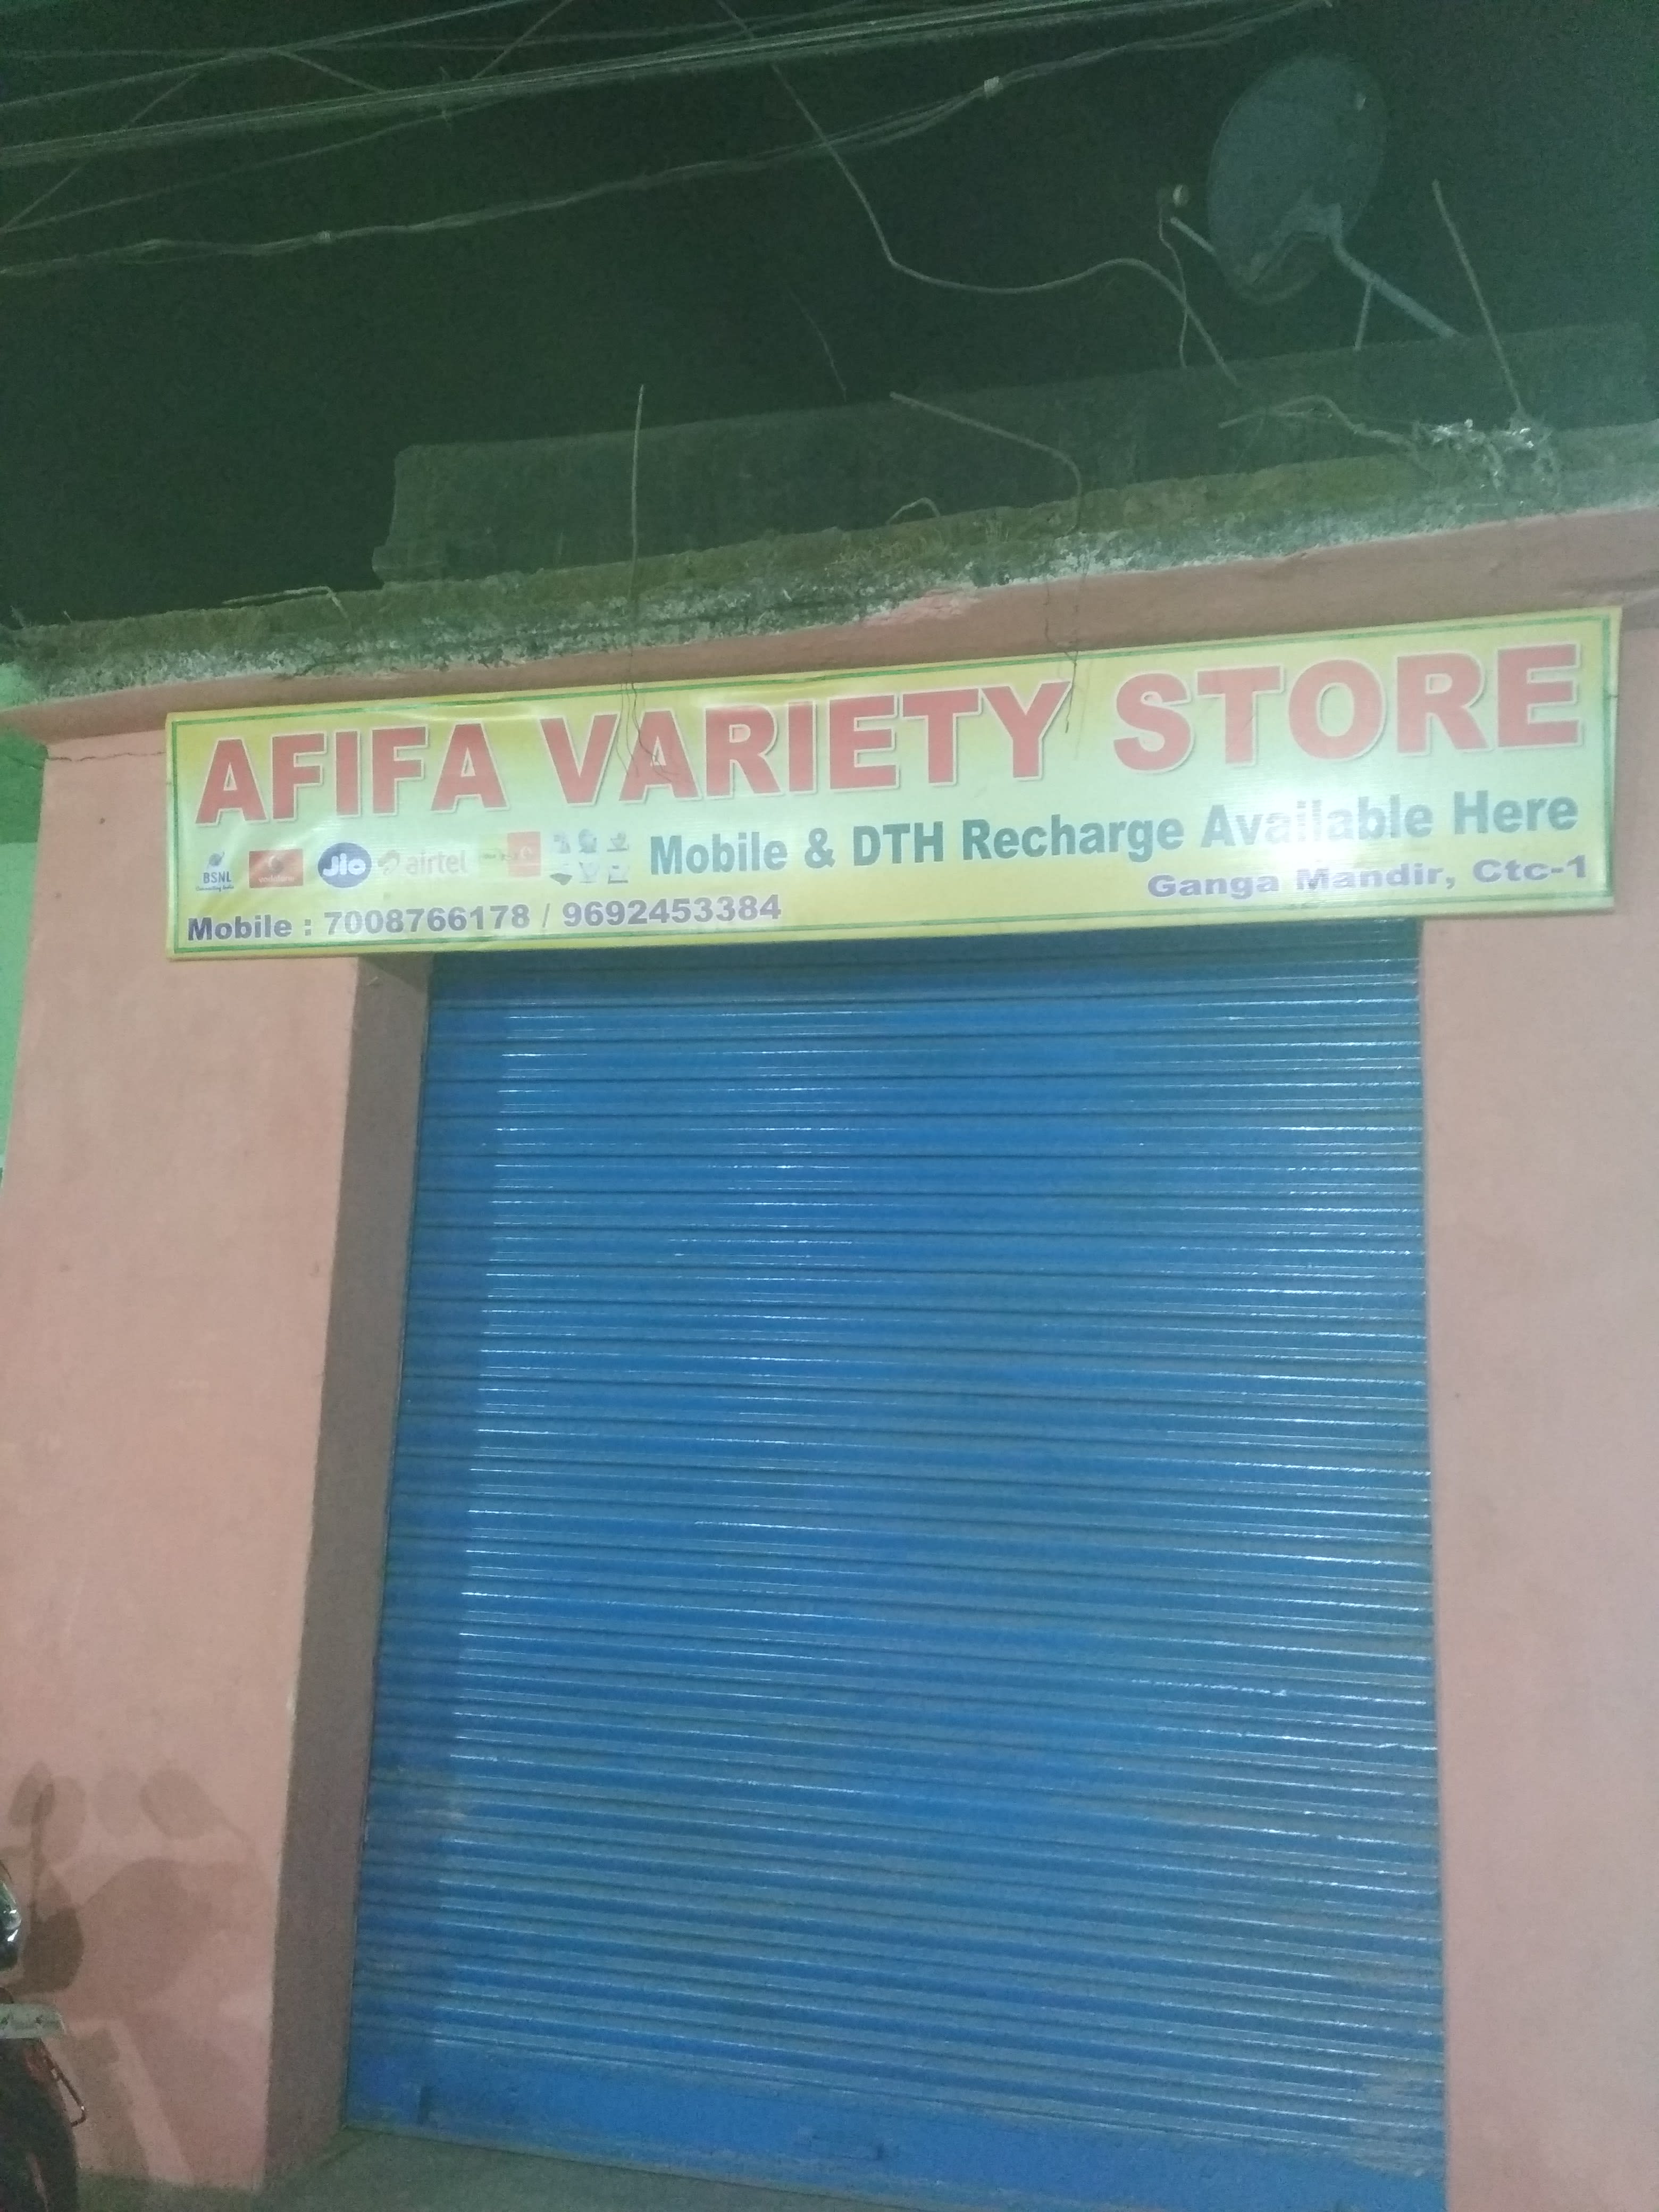 Afifa Variety Store